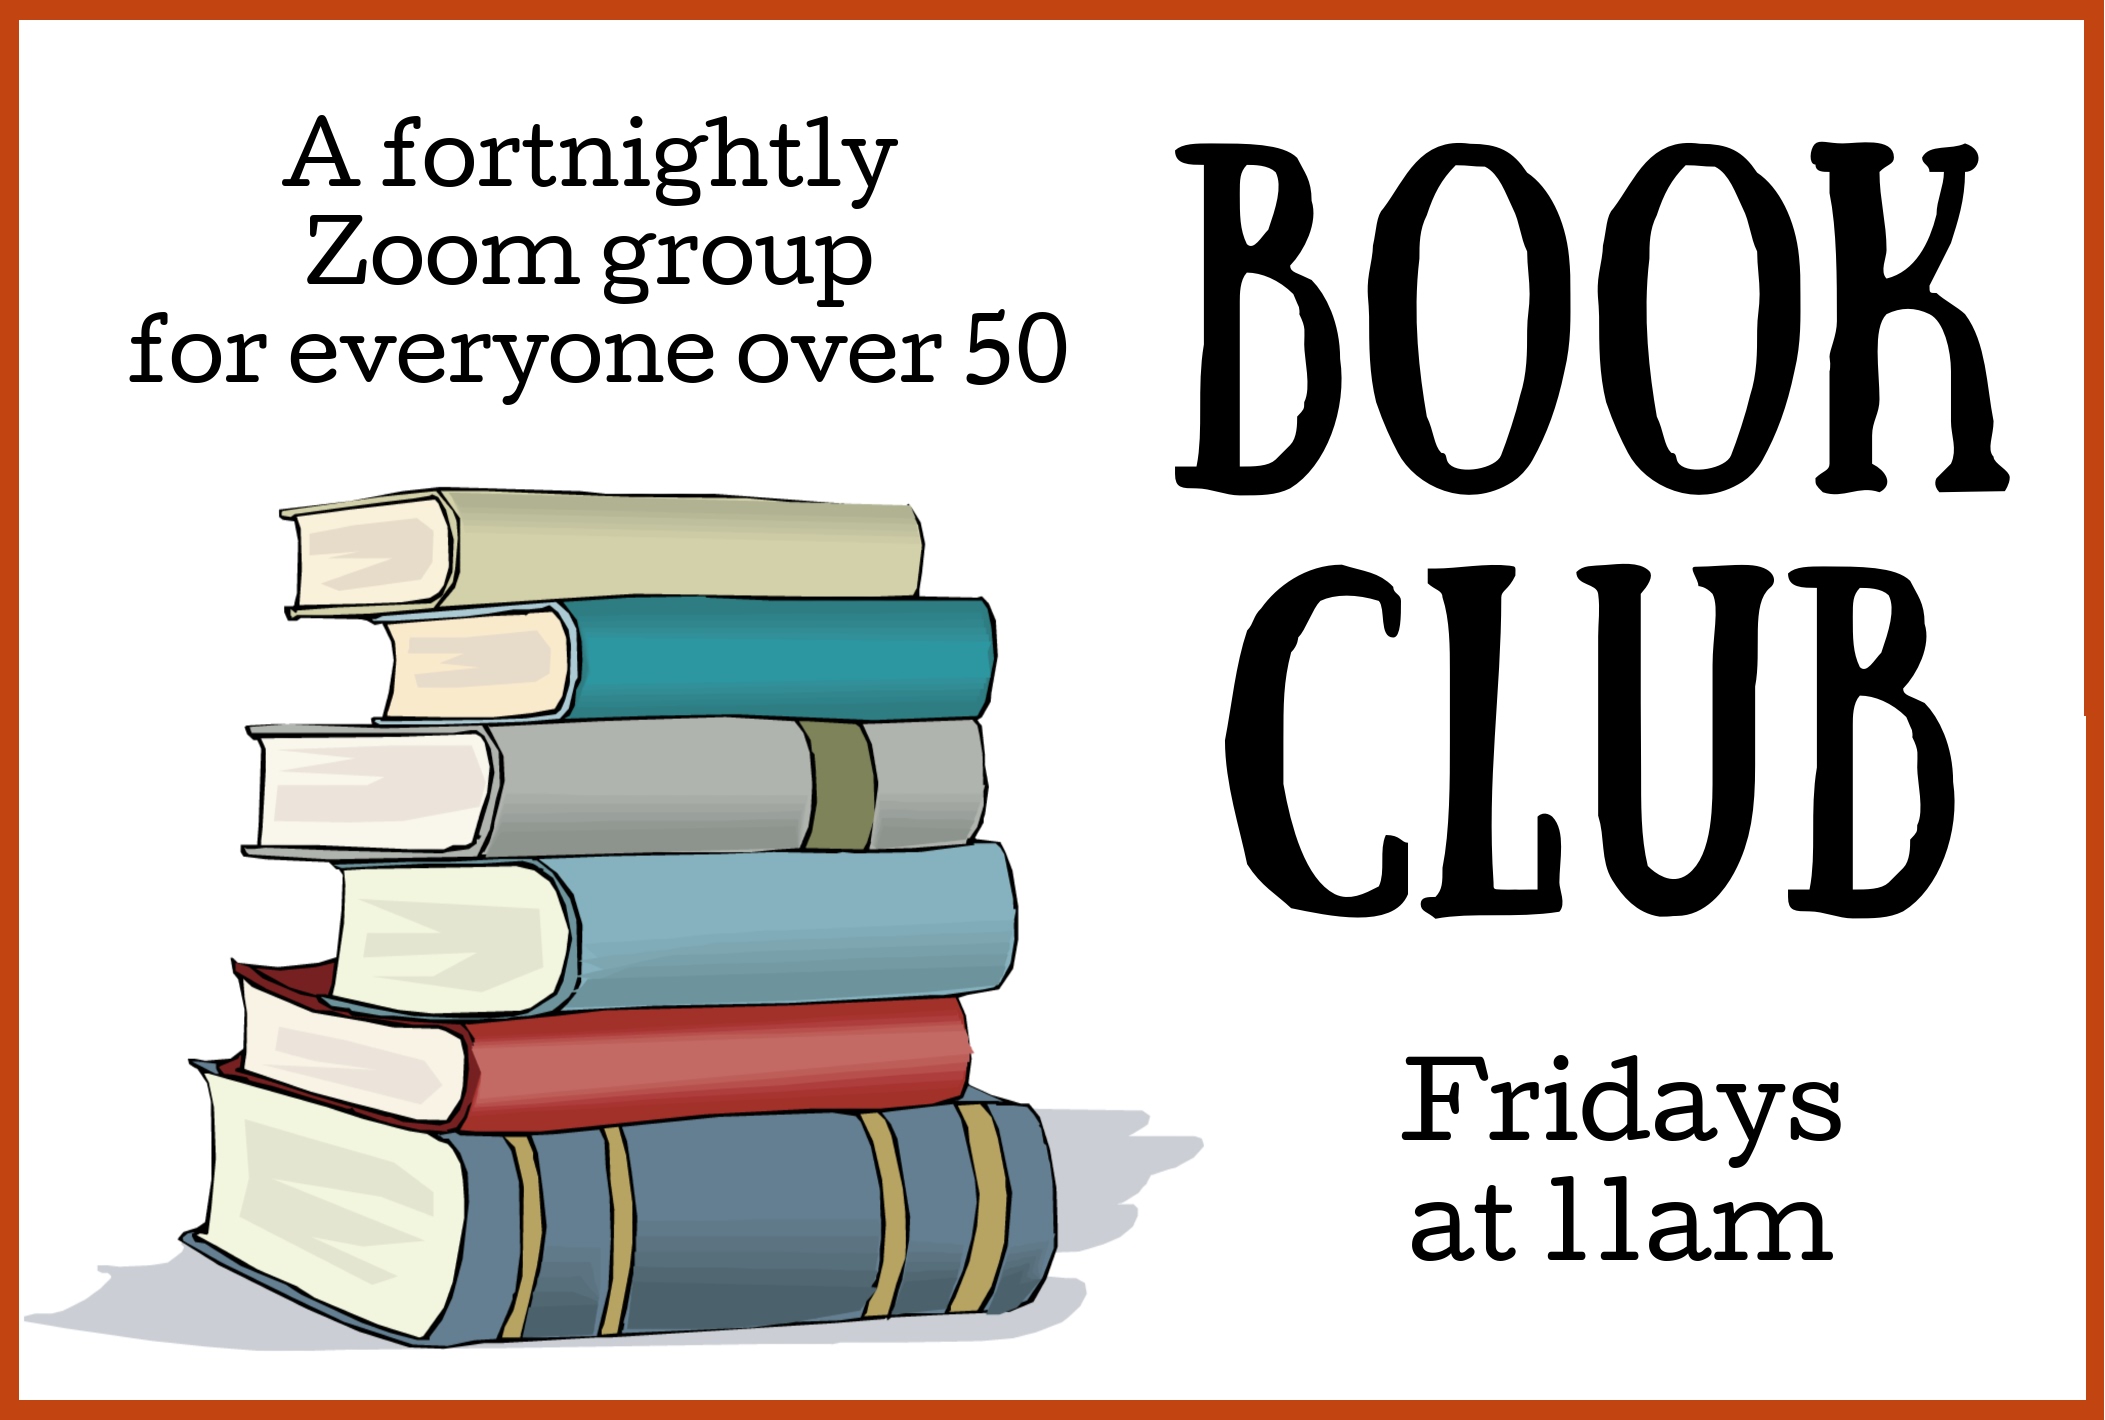 Book Club graphic